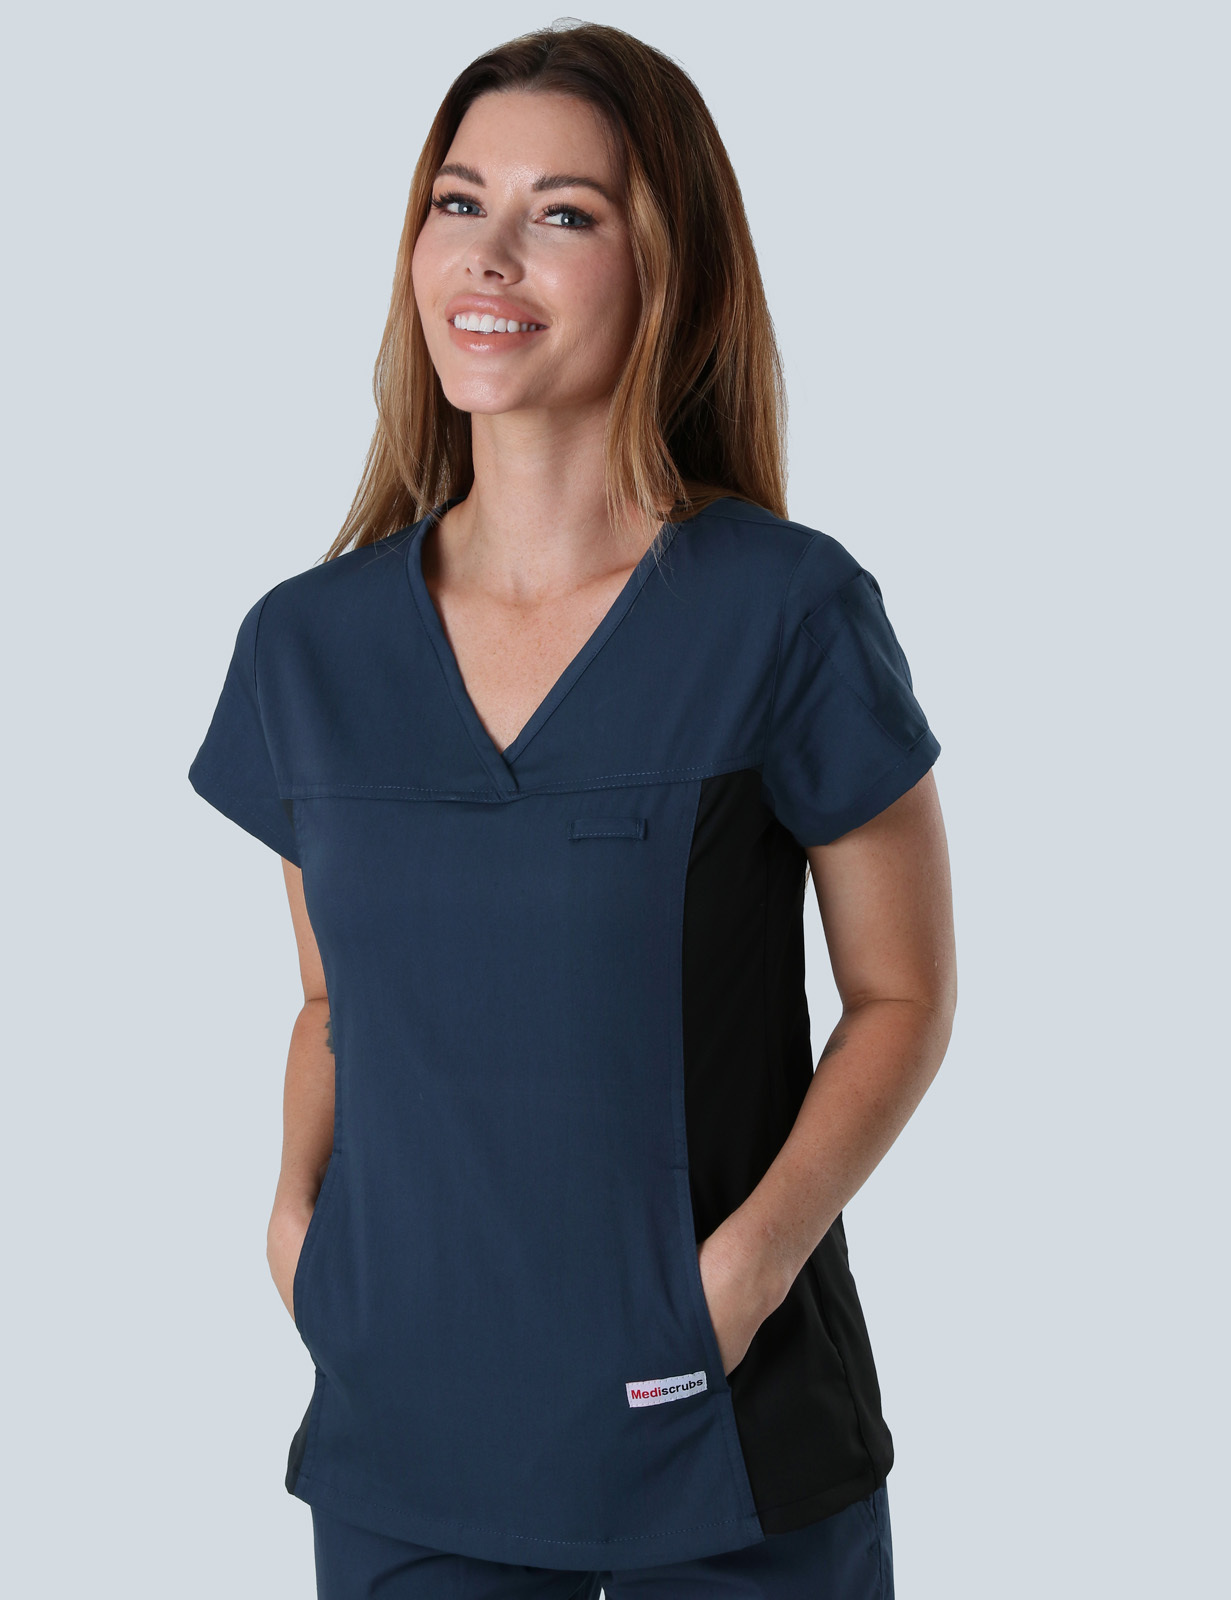 Ipswich Hospital Clinical Measurements Uniform Set Bundle (Women's Fit Spandex and Regular Pants in Navy incl Logos)